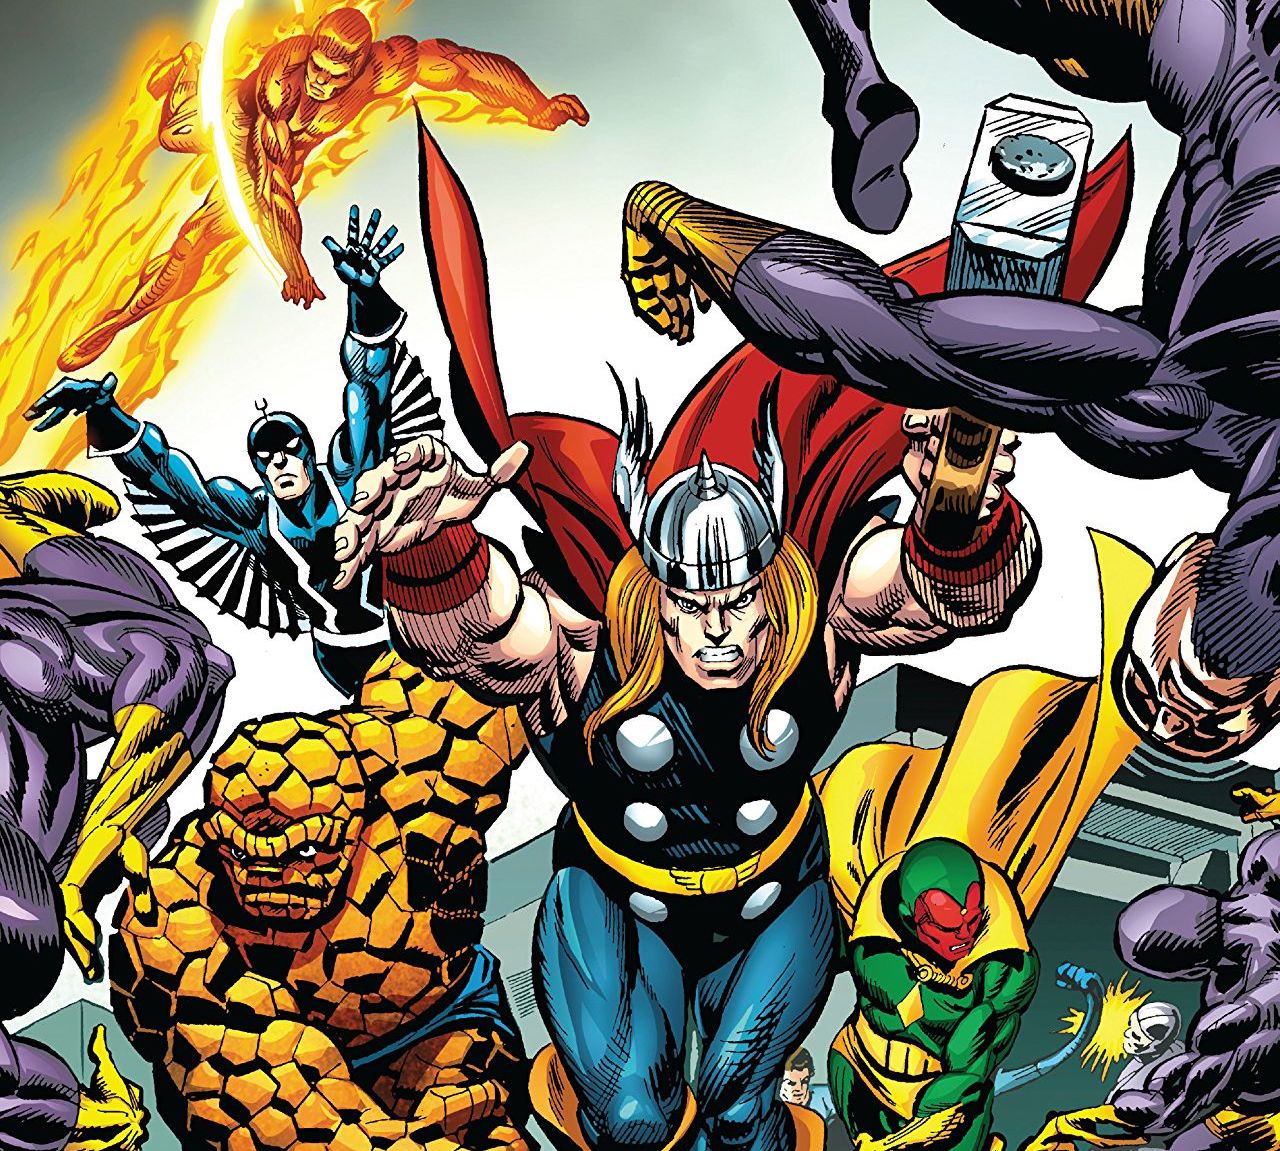 Avengers vs. Fantastic Four TPB Review